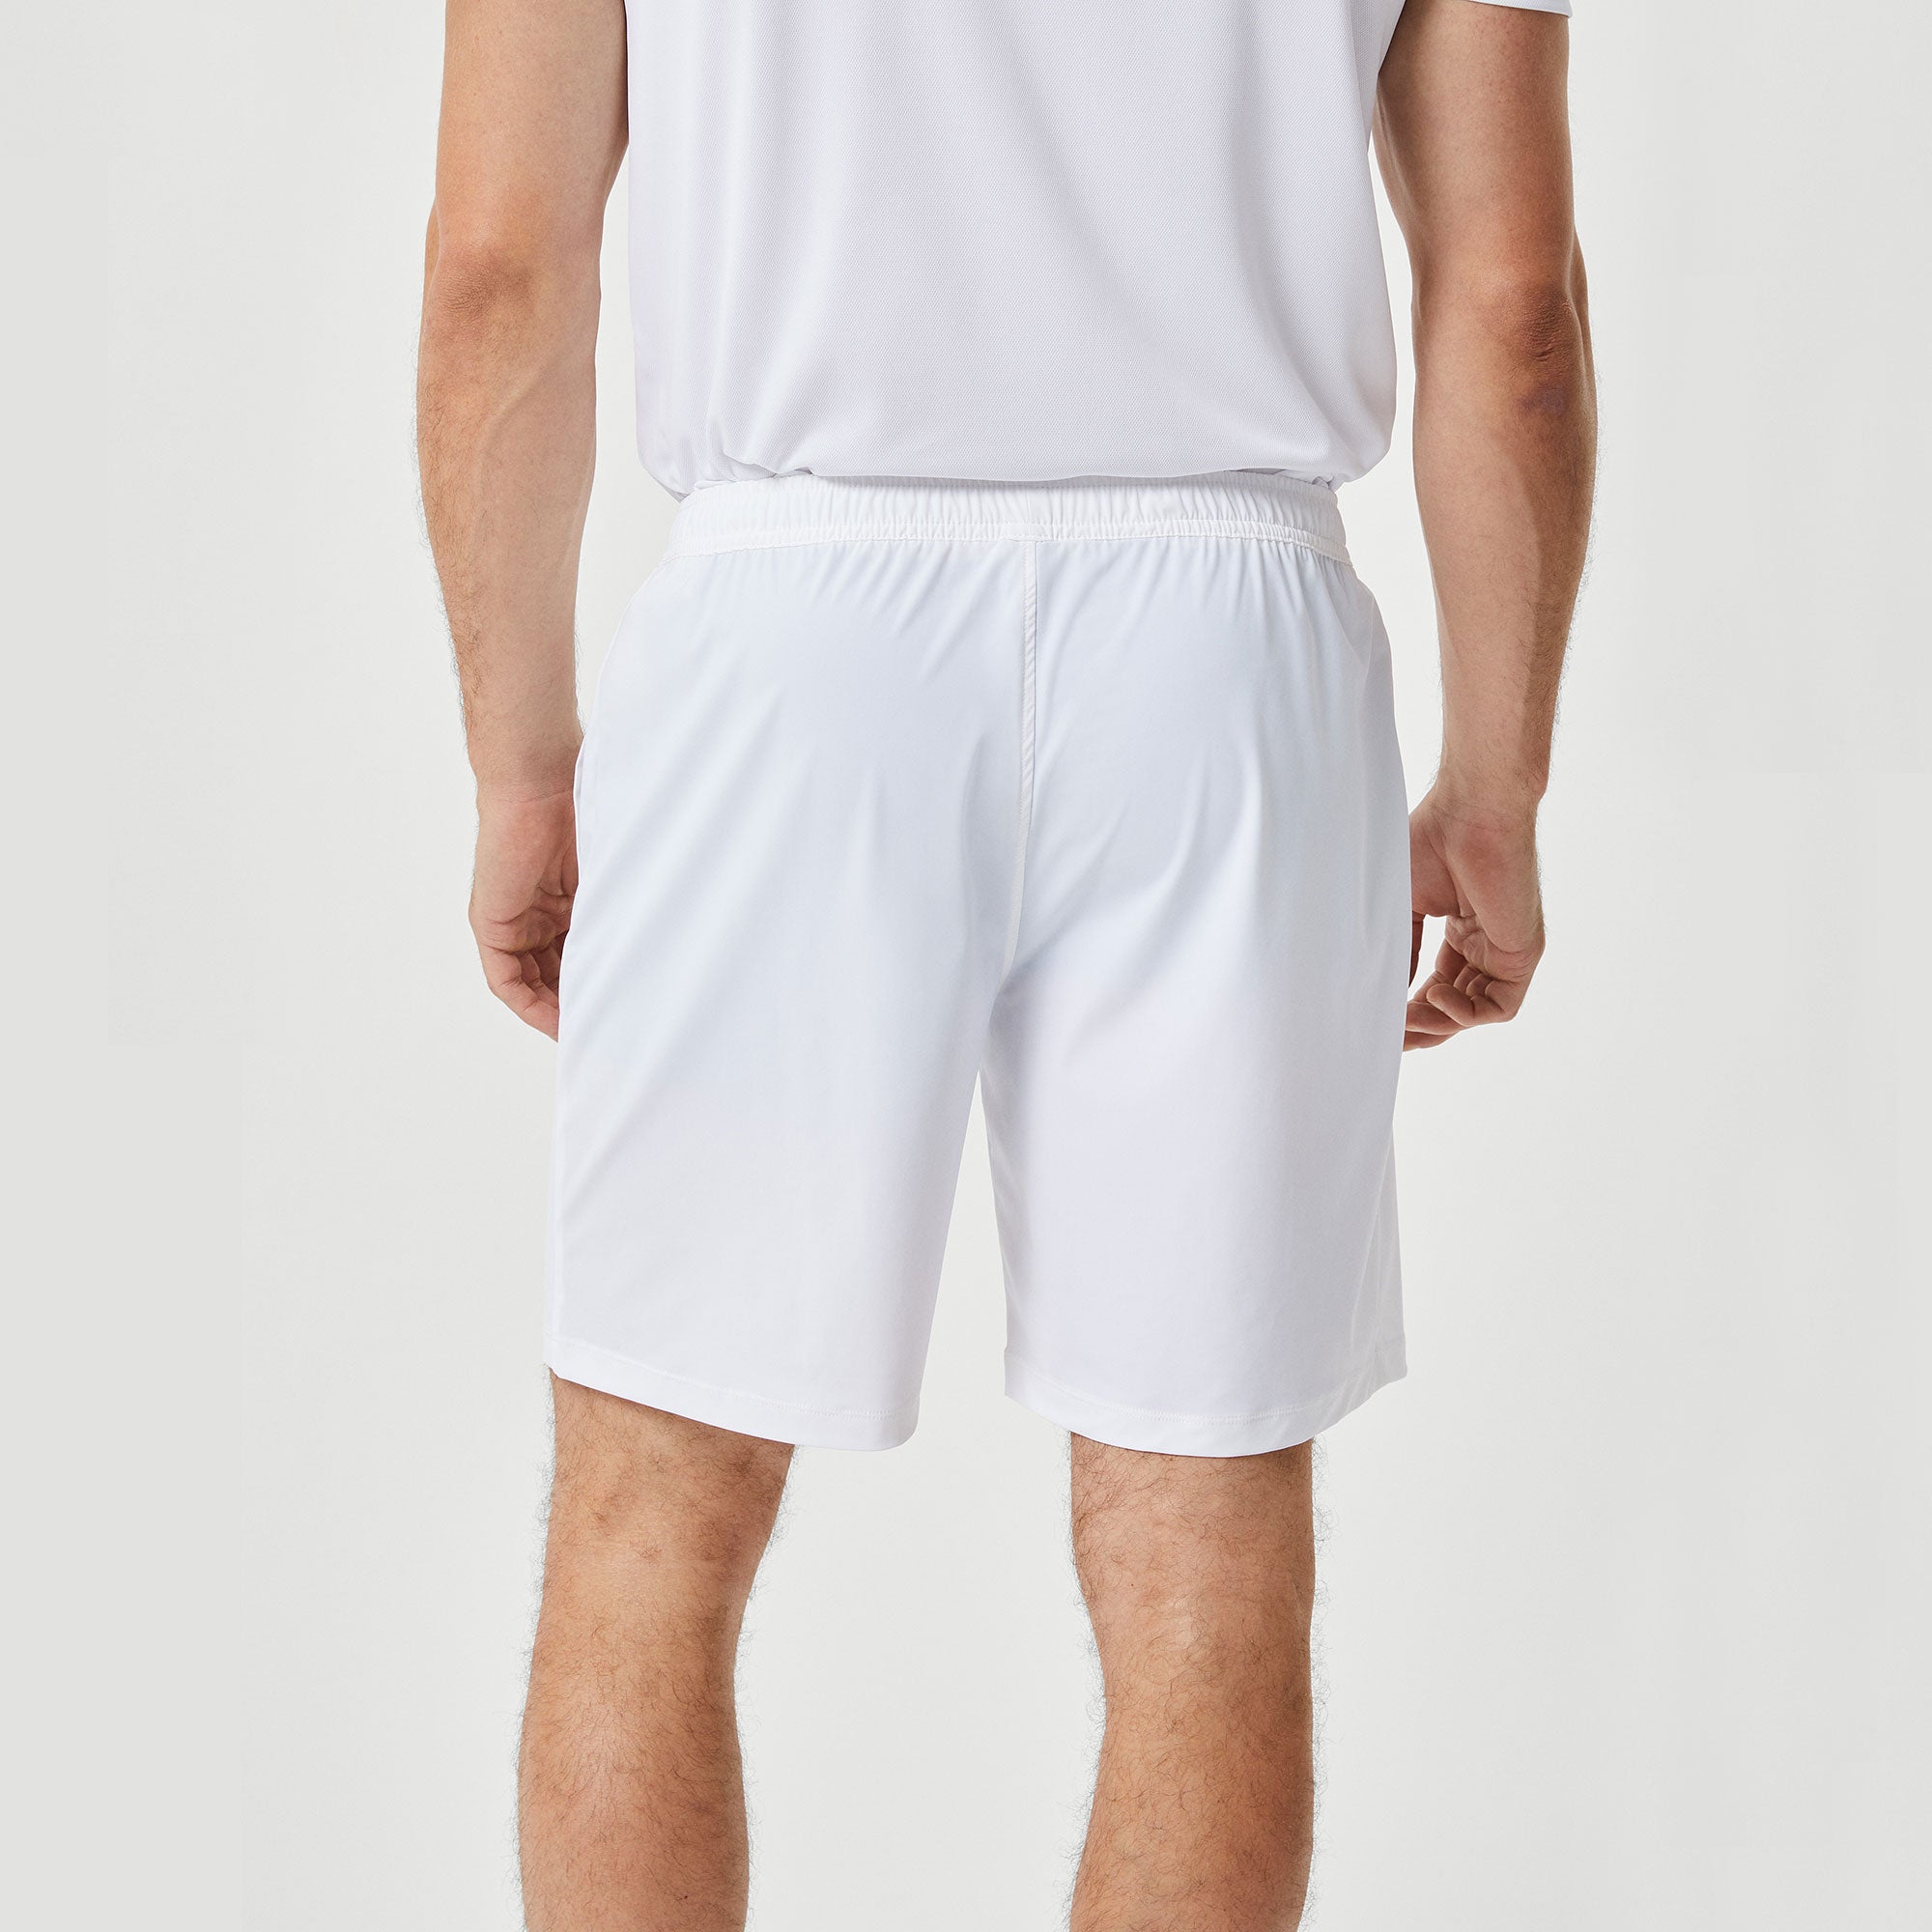 Björn Borg Ace Men's 9-Inch Tennis Shorts - White (2)